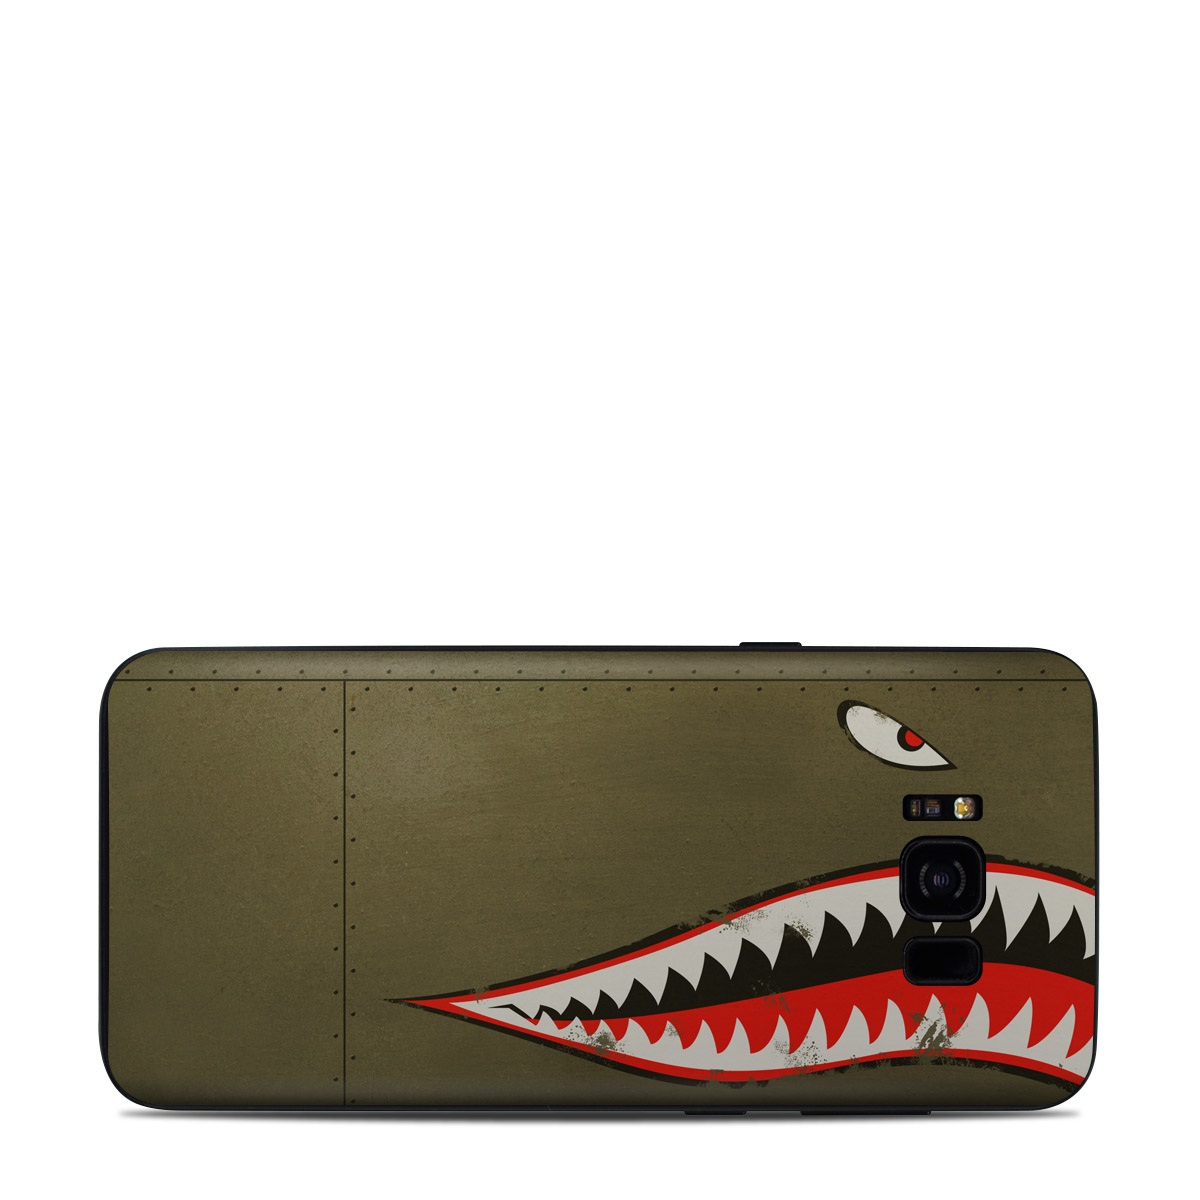 Samsung Galaxy S8 Plus Skin - USAF Shark (Image 1)